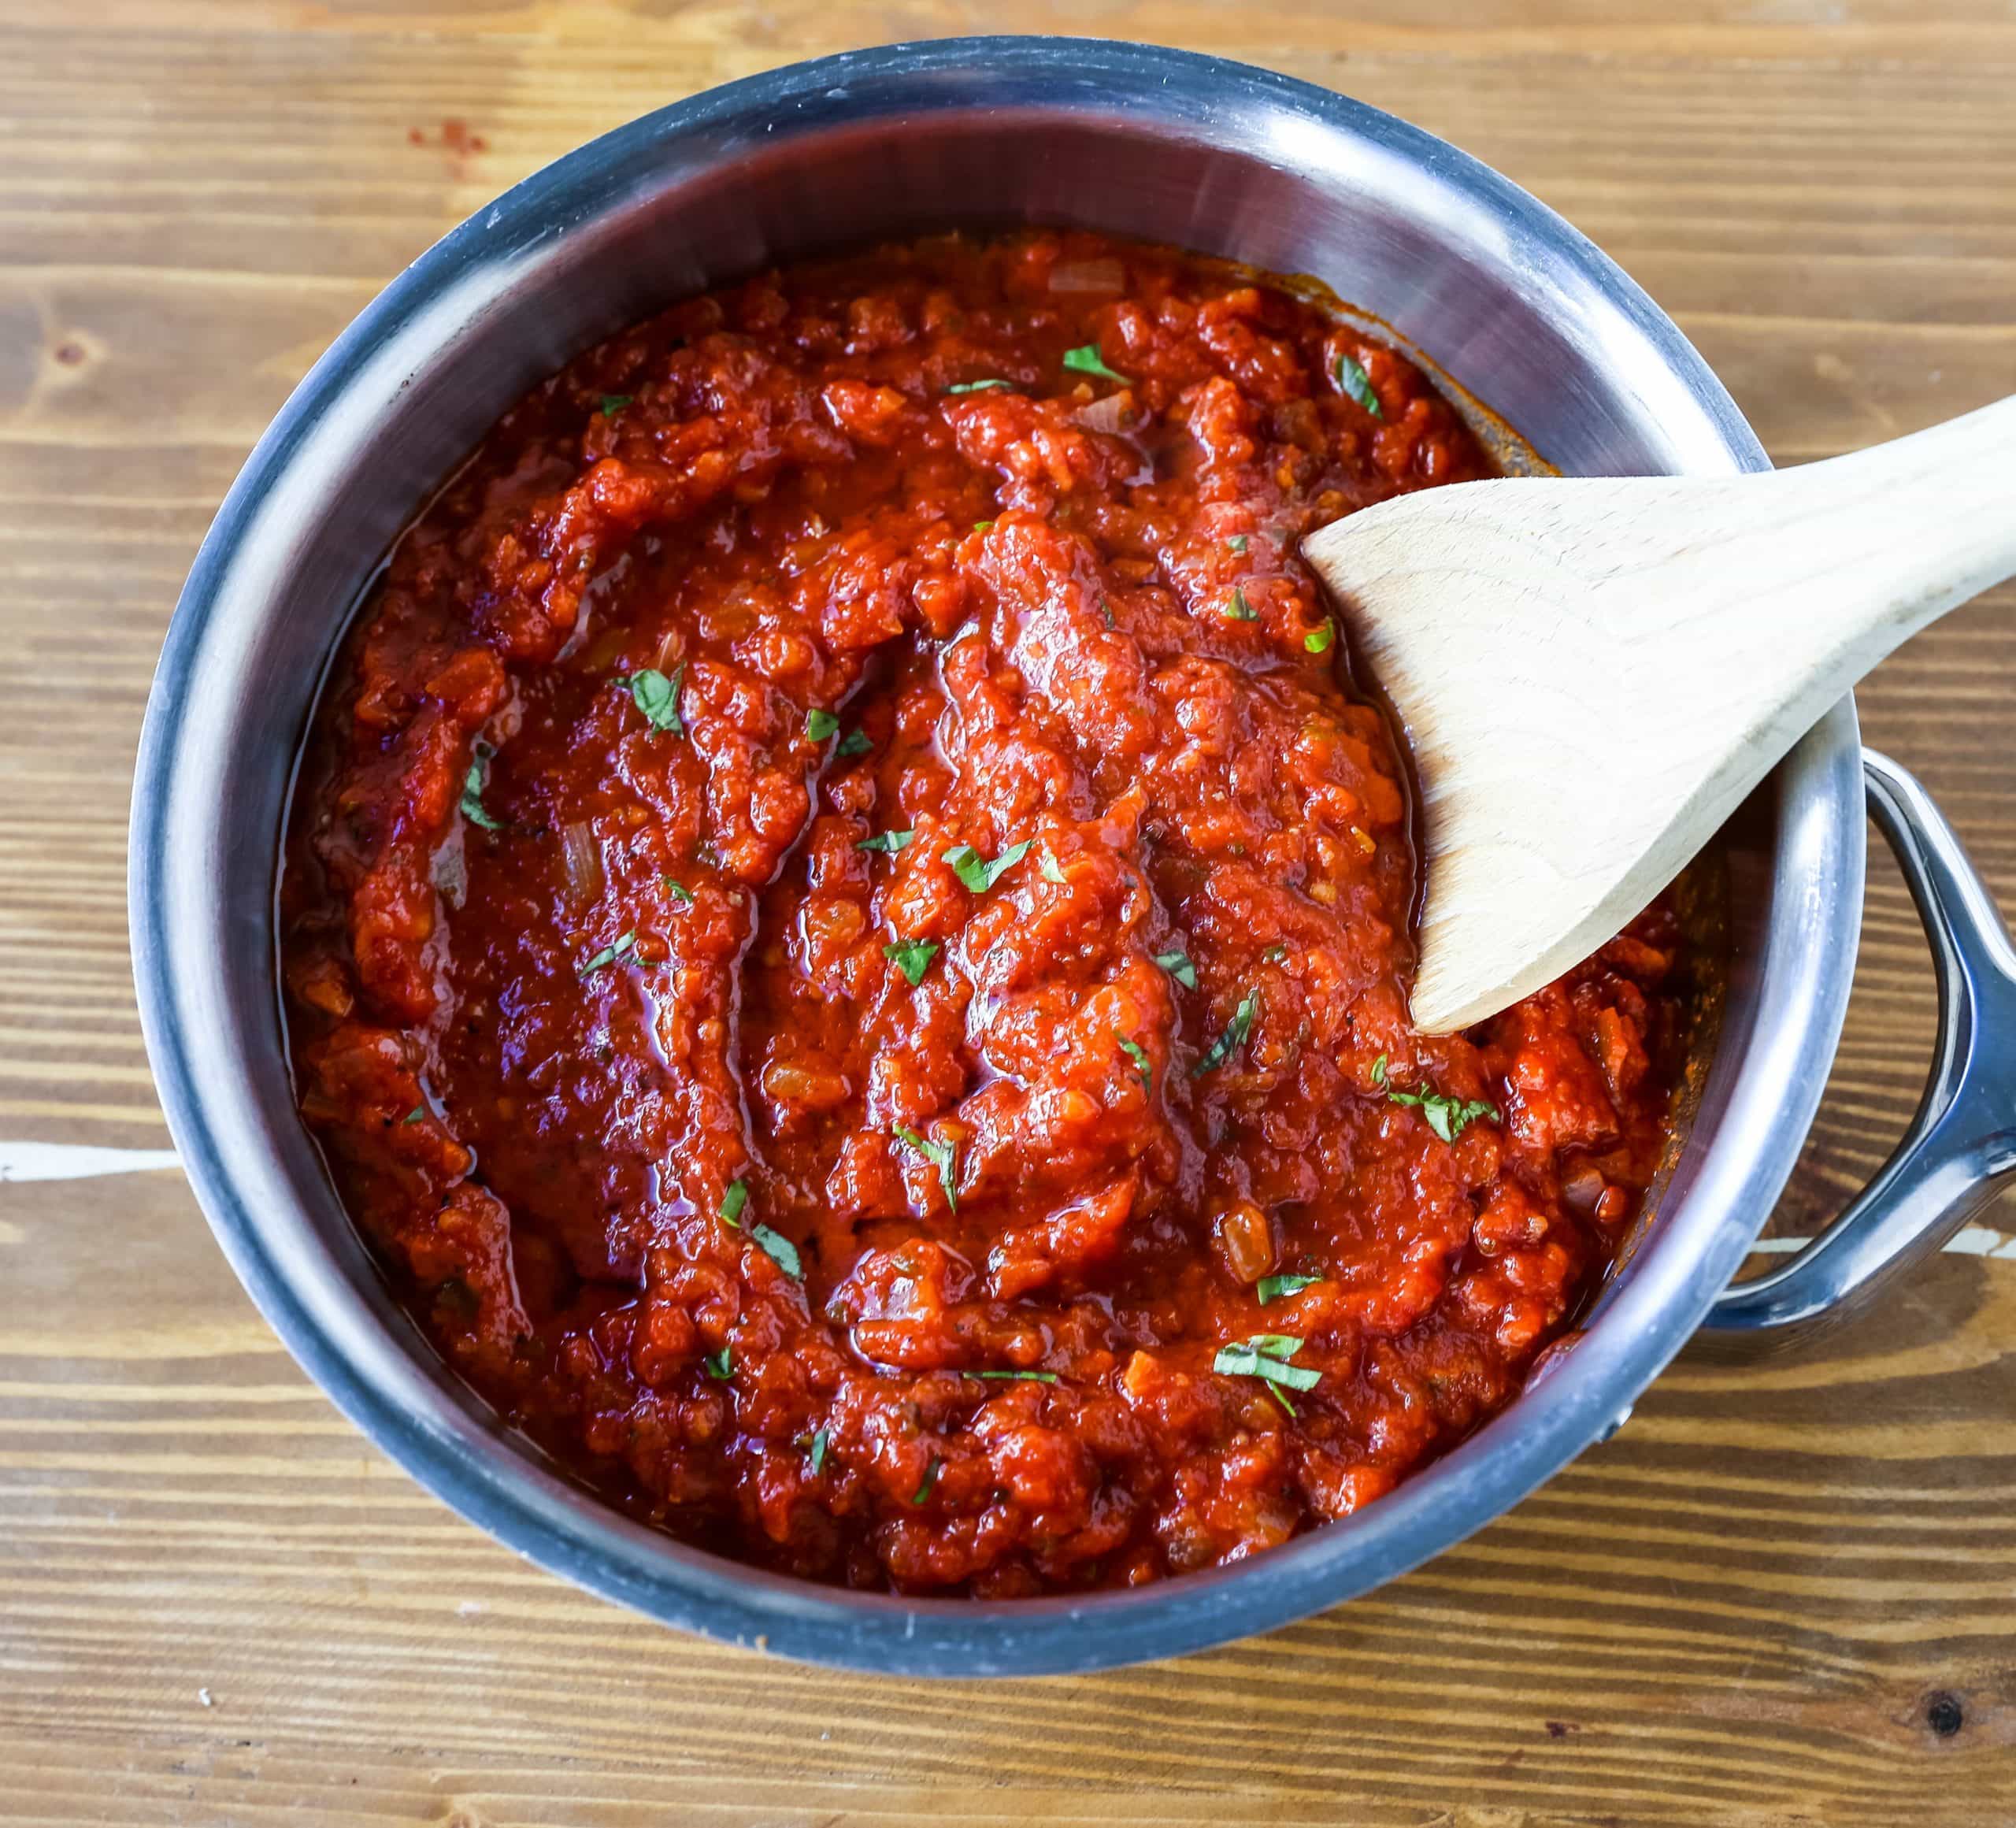 Classic Italian Tomato Sauce